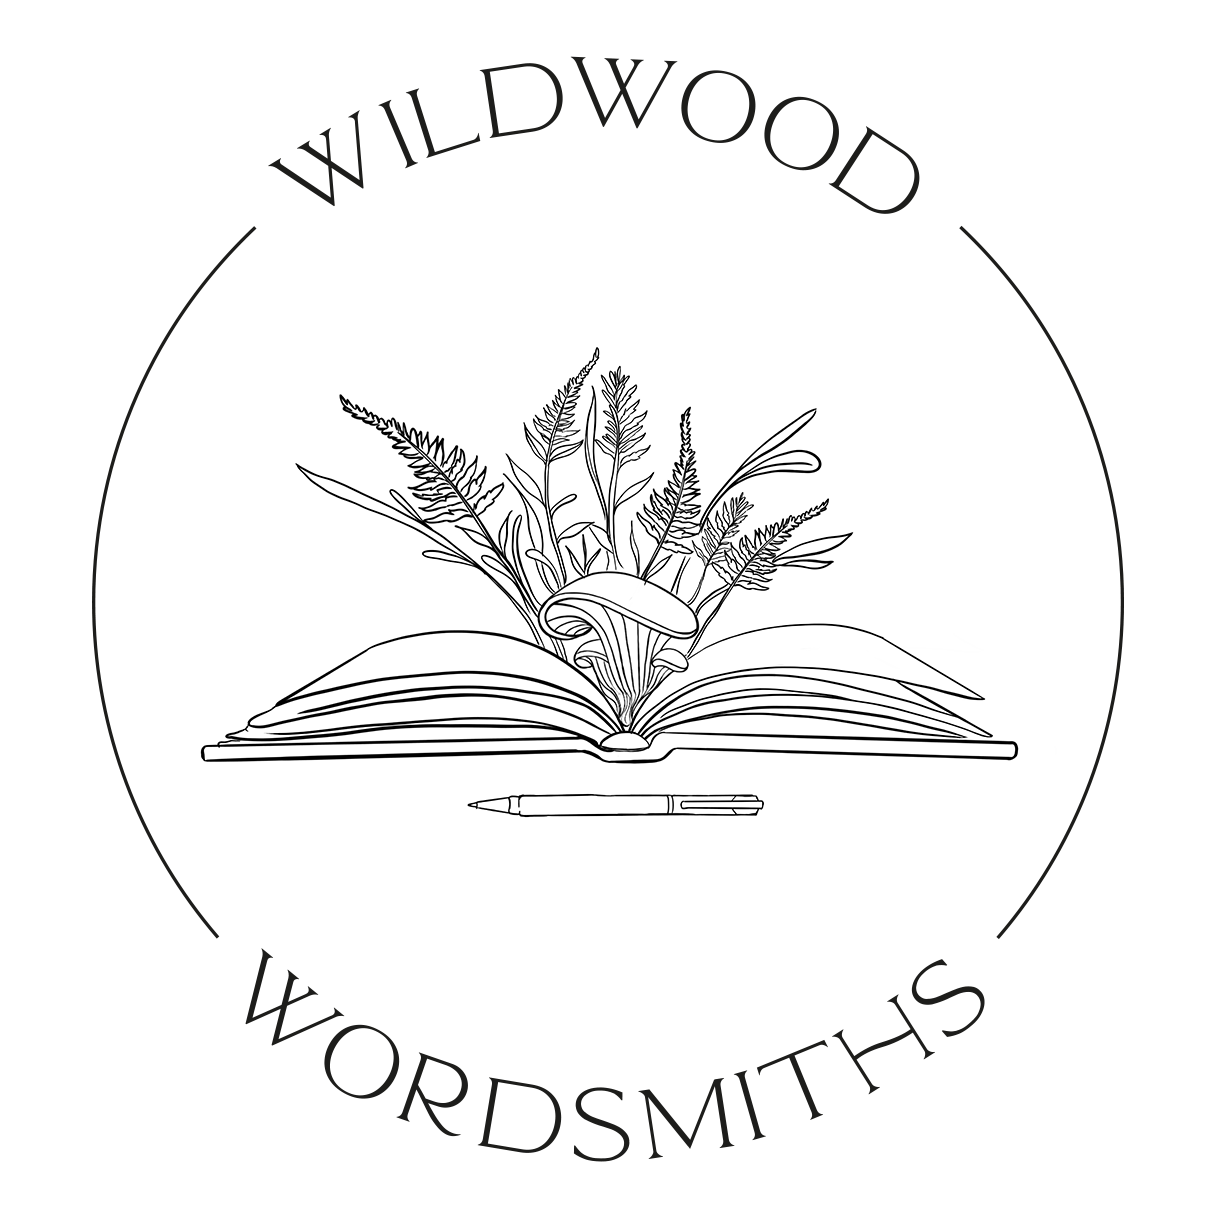 Wildwood Wordsmiths